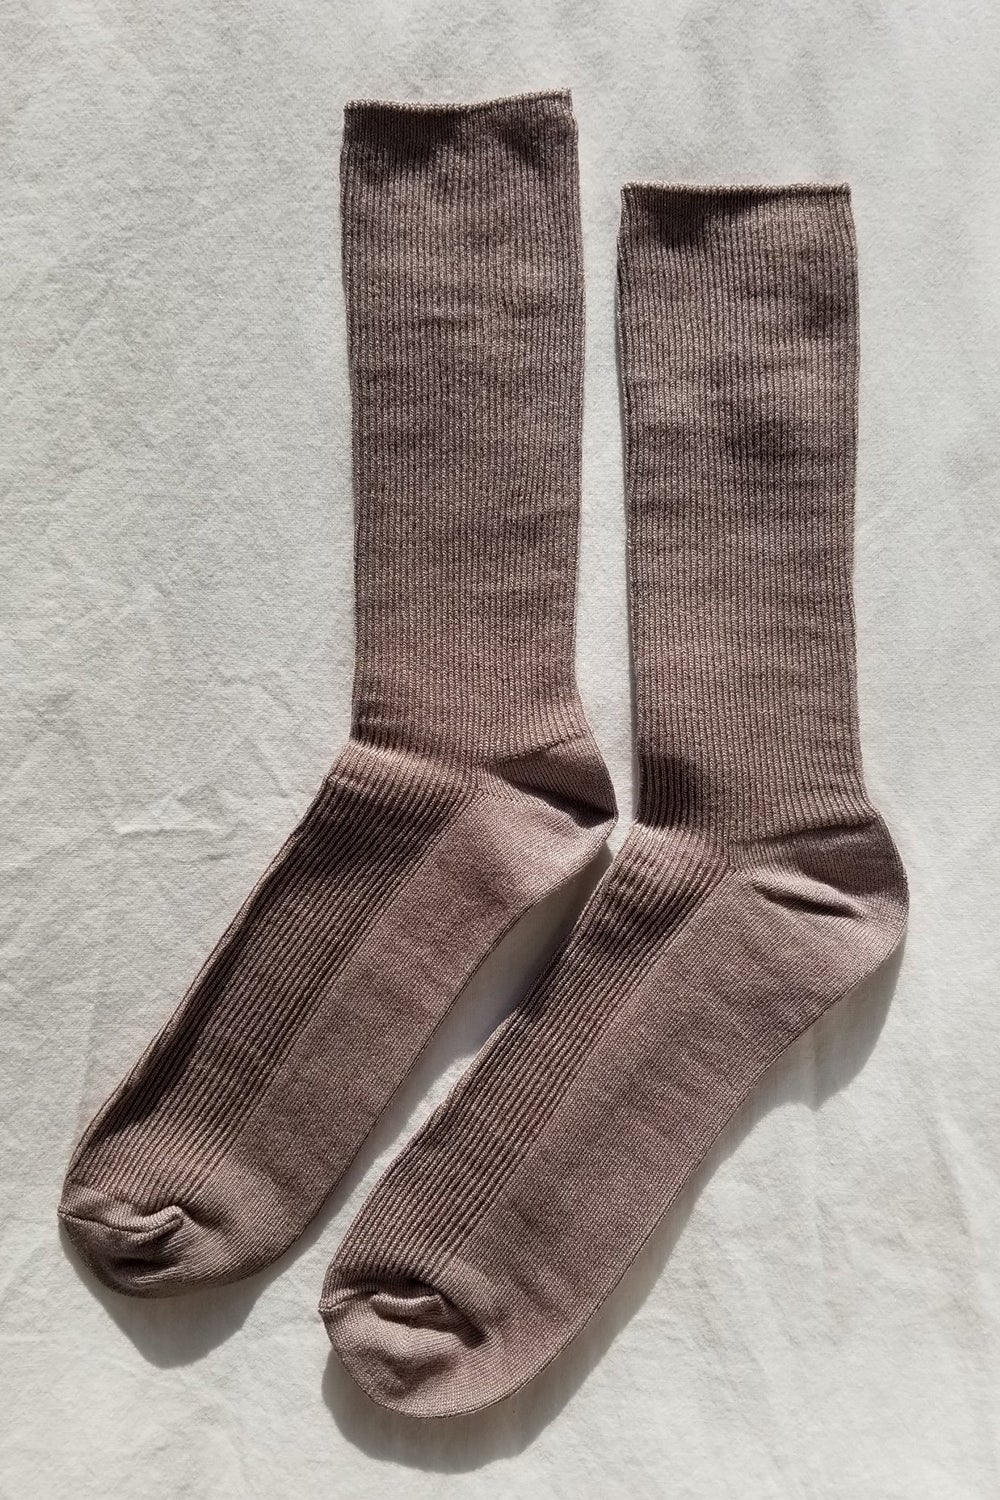 Celeste Stein® Opaque Closed Toe Wide Calf Mild Compression Trouser Socks -  2 Pack | Signals